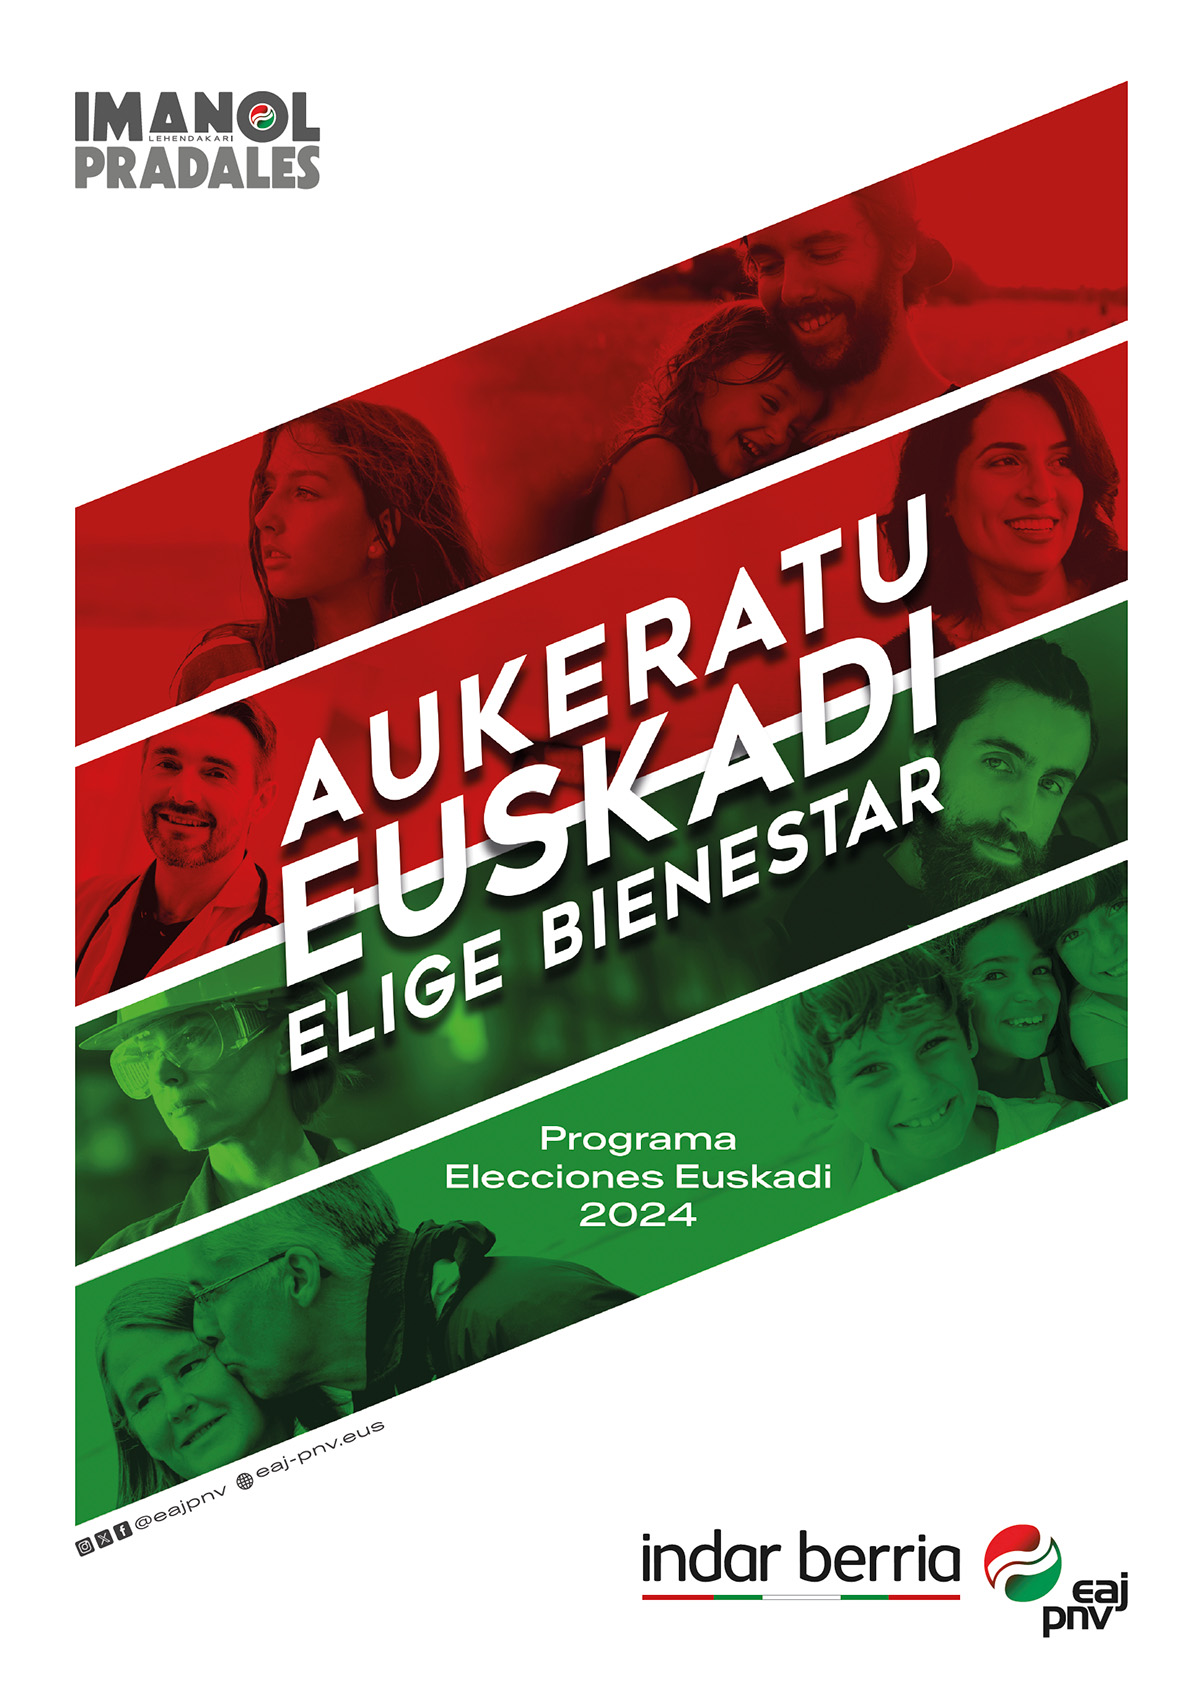 Aukeratu Euskadi Elige Bienestar